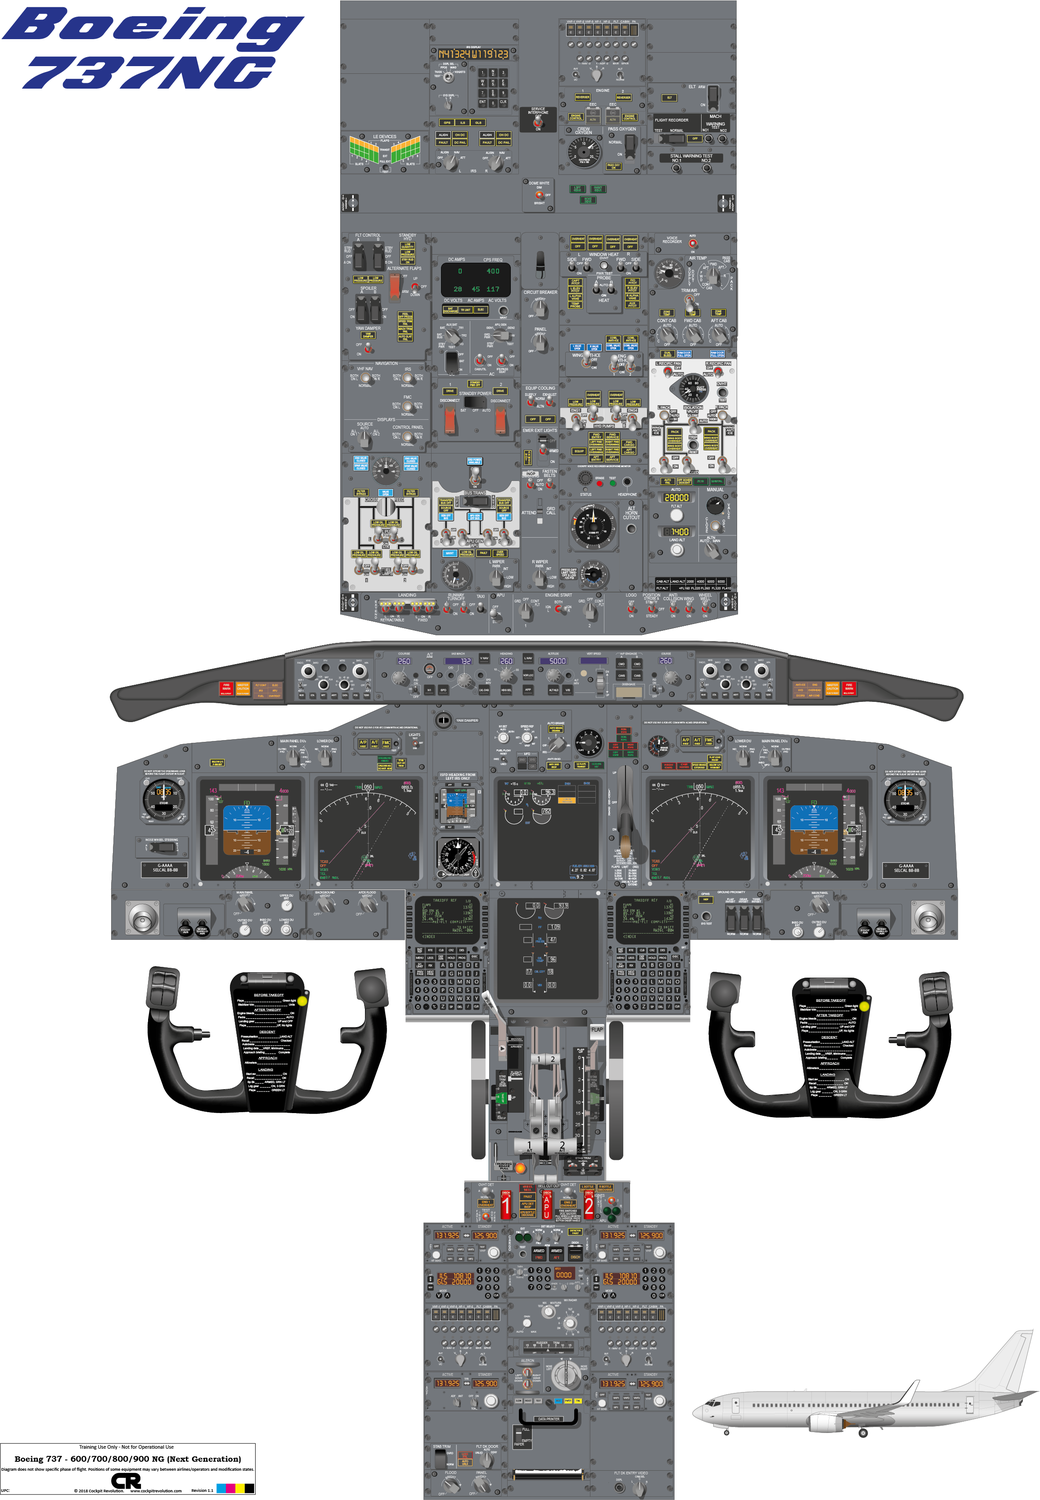 Boeing 737 Original, Classic, NG & MAX Cockpit Posters - Printed